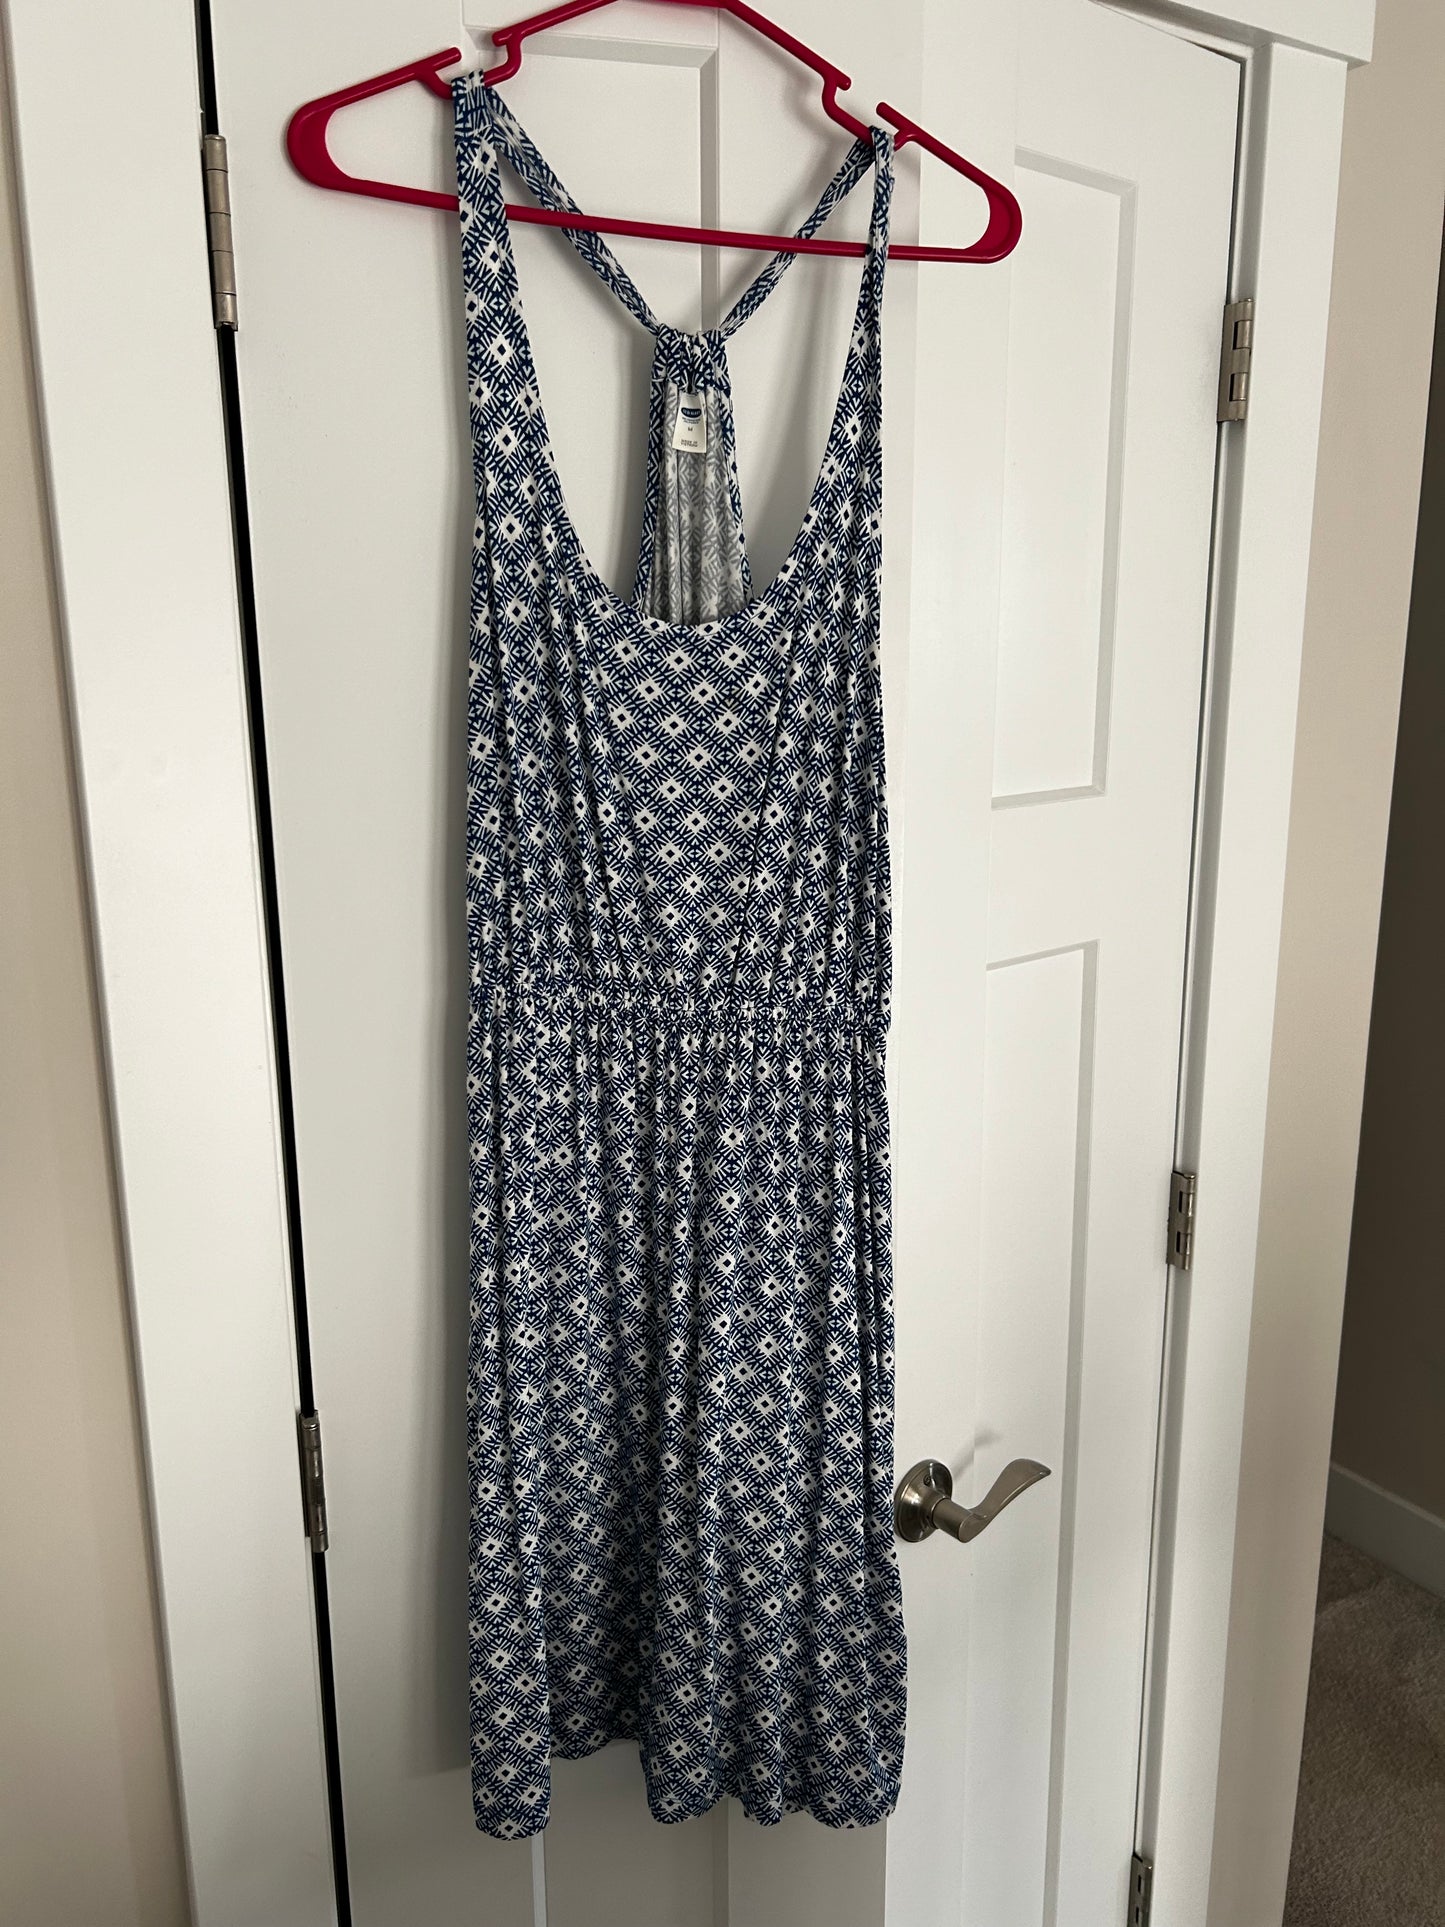 Size Medium Women's Old Navy Blue and White Summer Dress